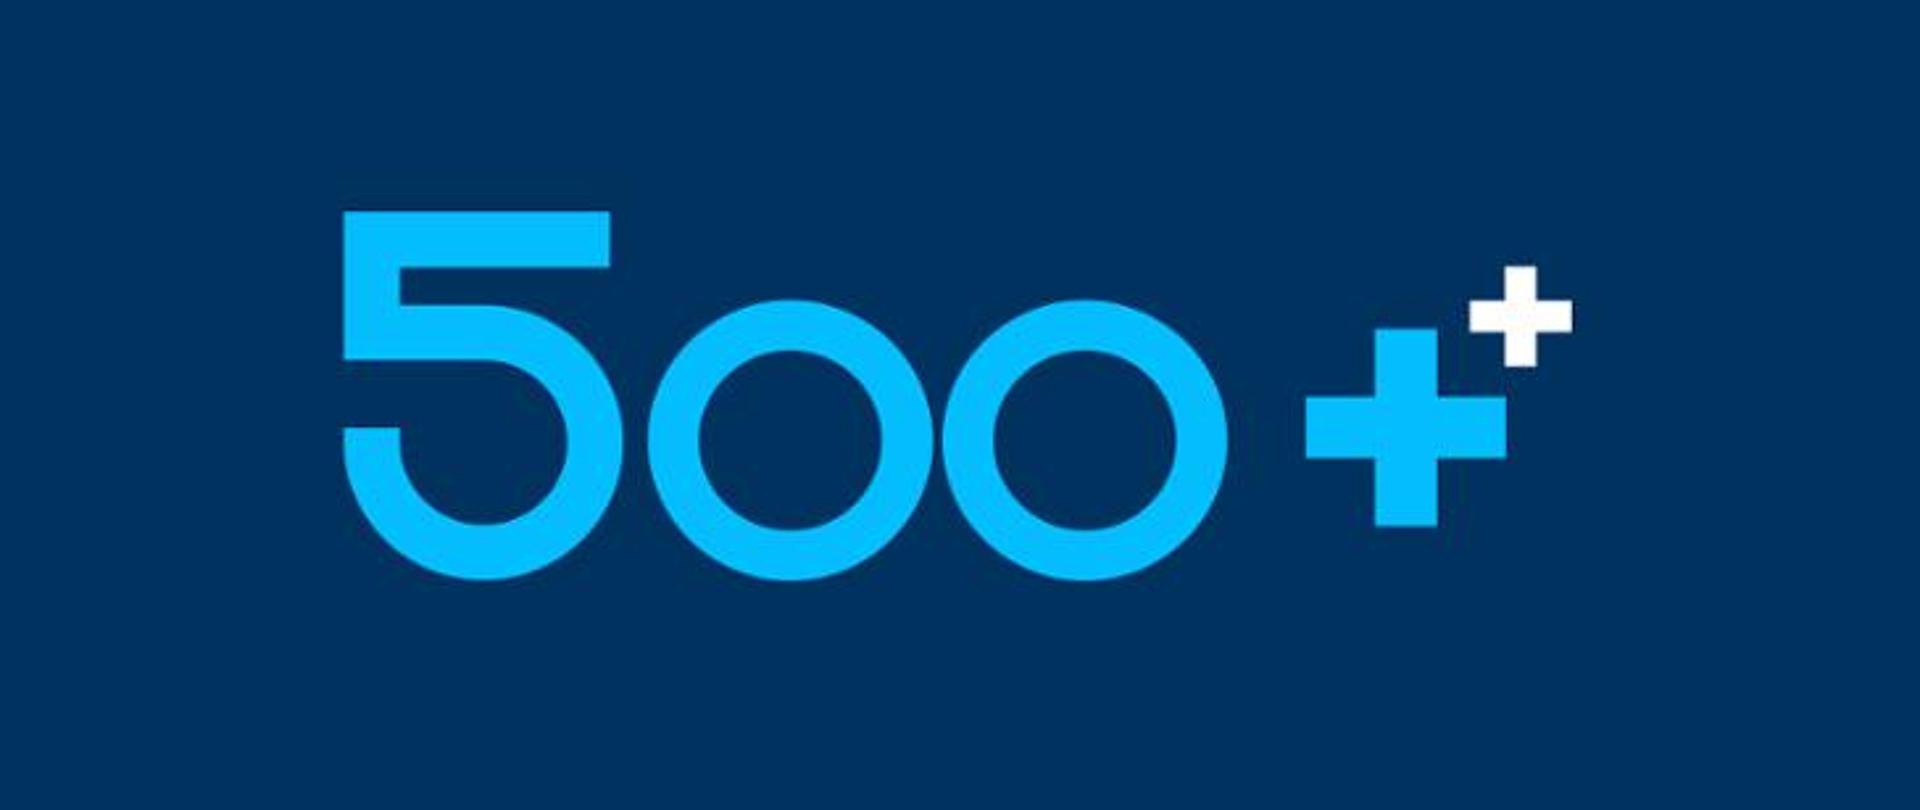 500 plus logo